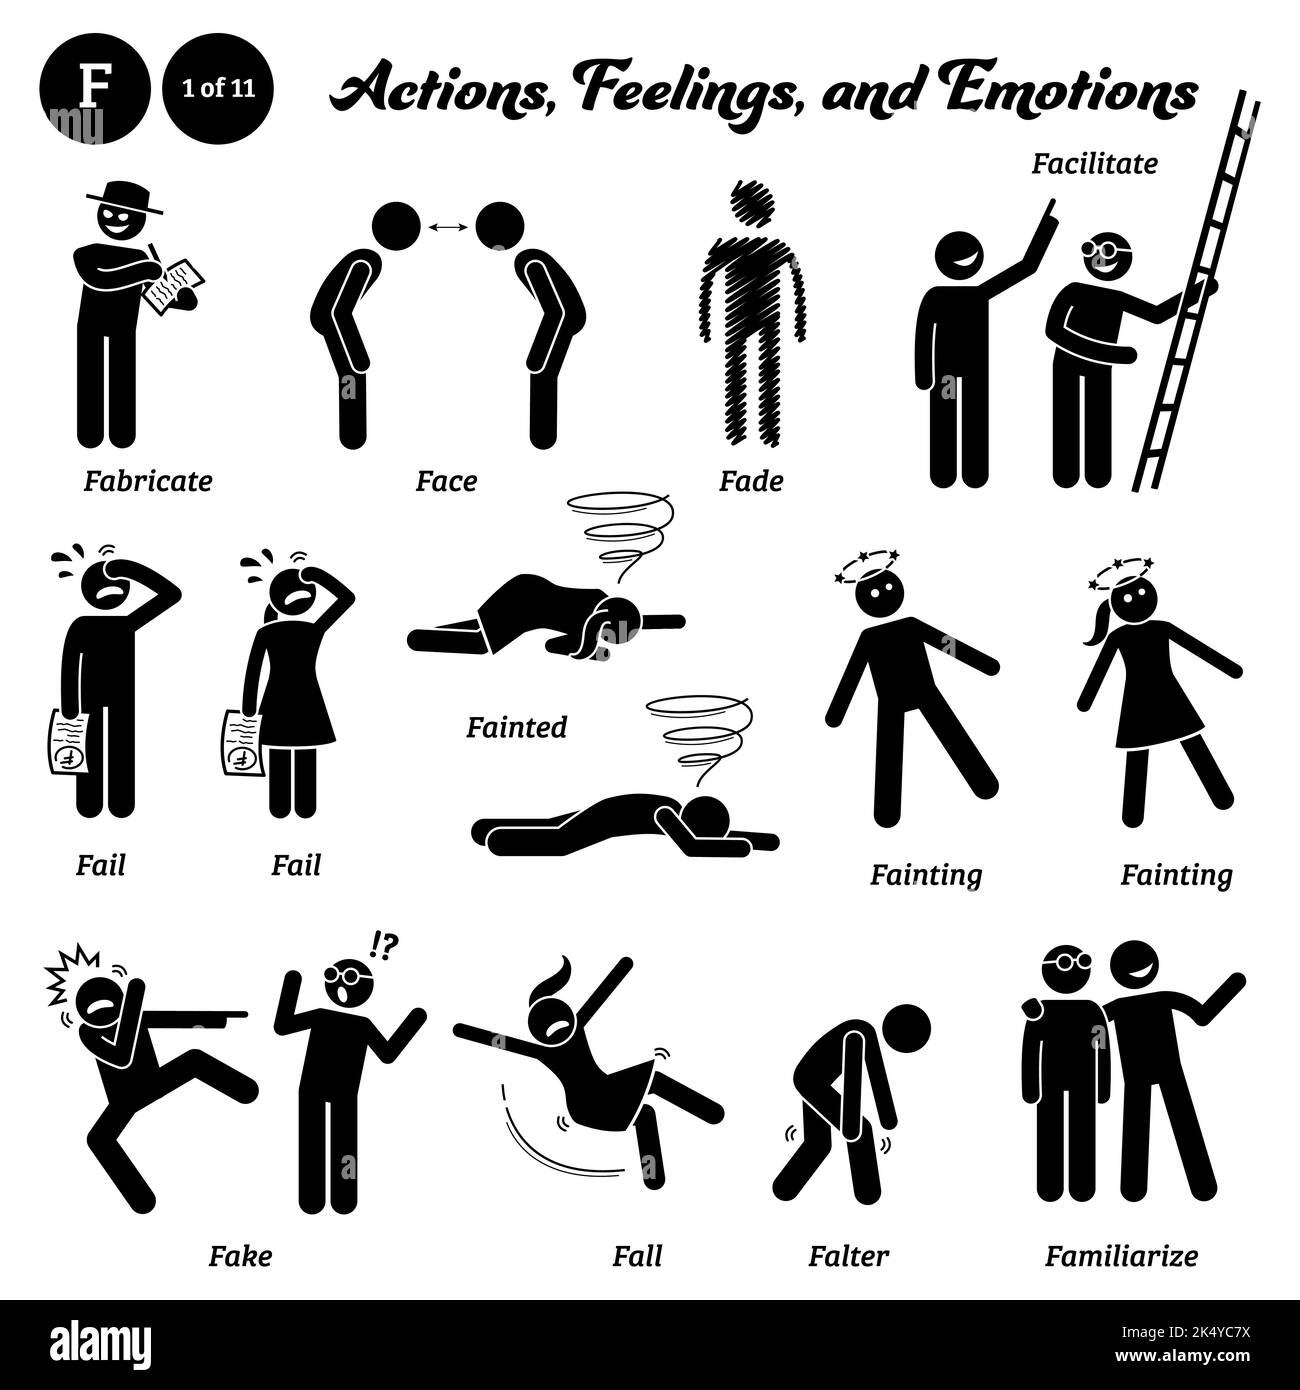 Stick figure human people man action, feelings, and emotions icons alphabet F. Fabricate, face, fade, facilitate, fail, fainted, fainting, fake, fall, Stock Vector